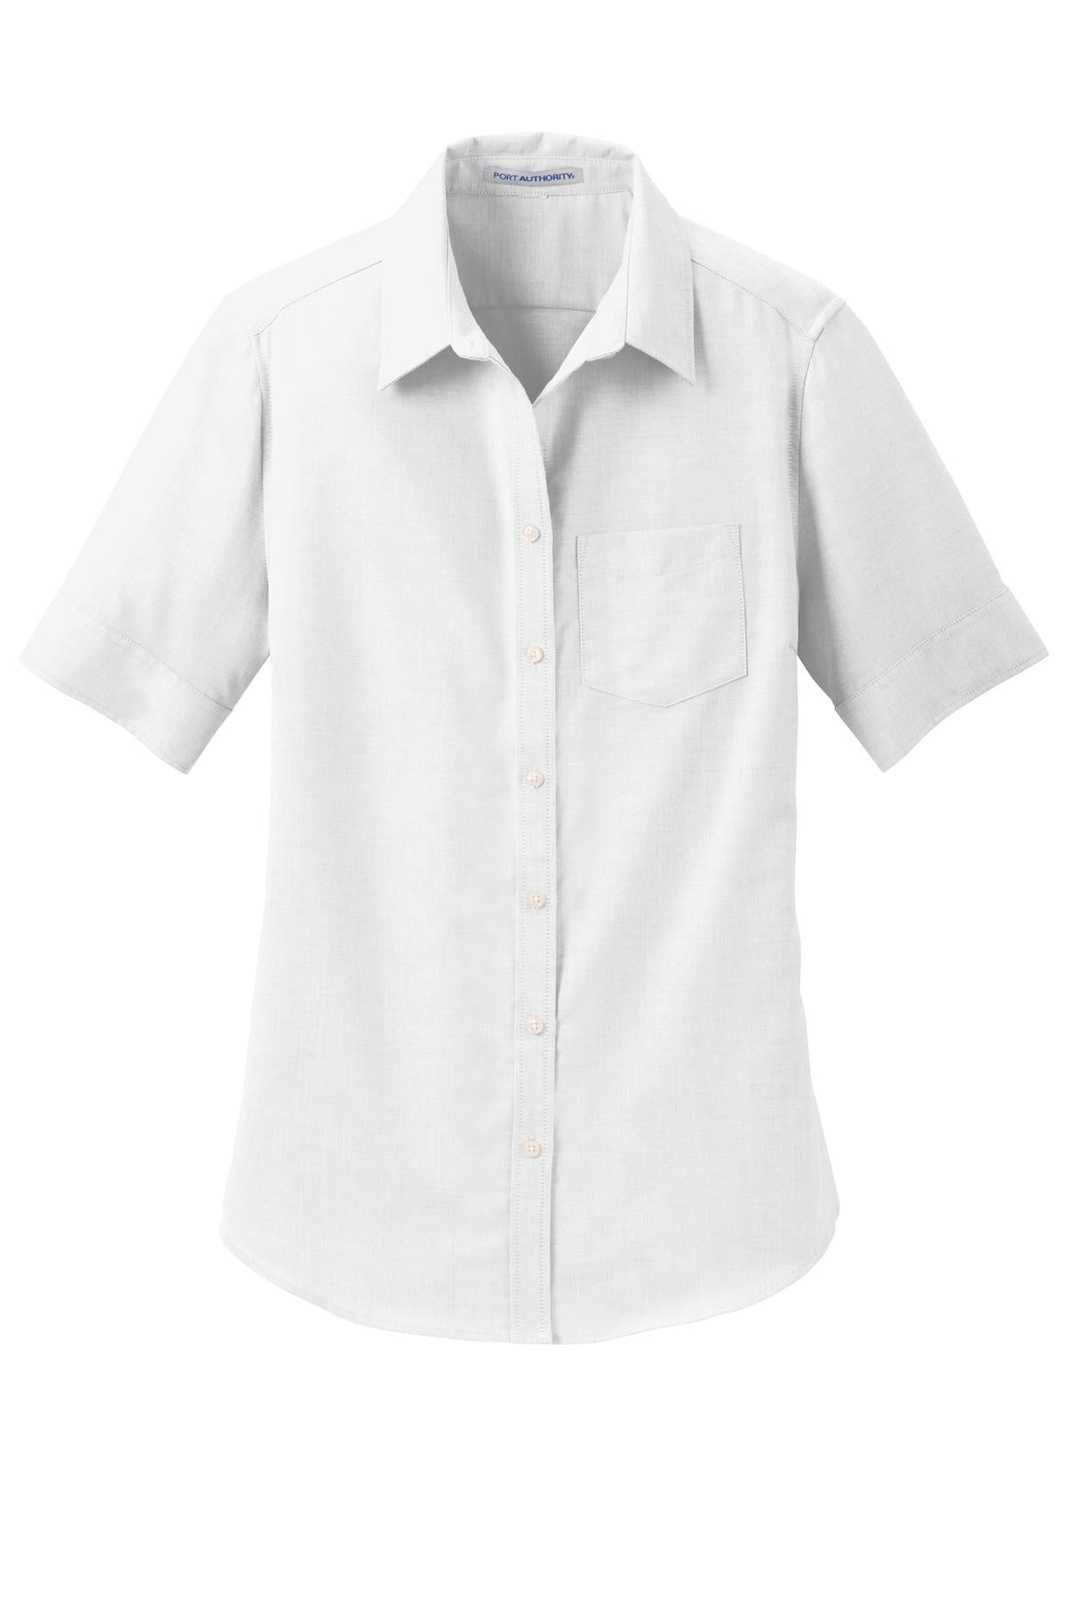 Port Authority L659 Ladies Short Sleeve Superpro Oxford Shirt - White - HIT a Double - 5